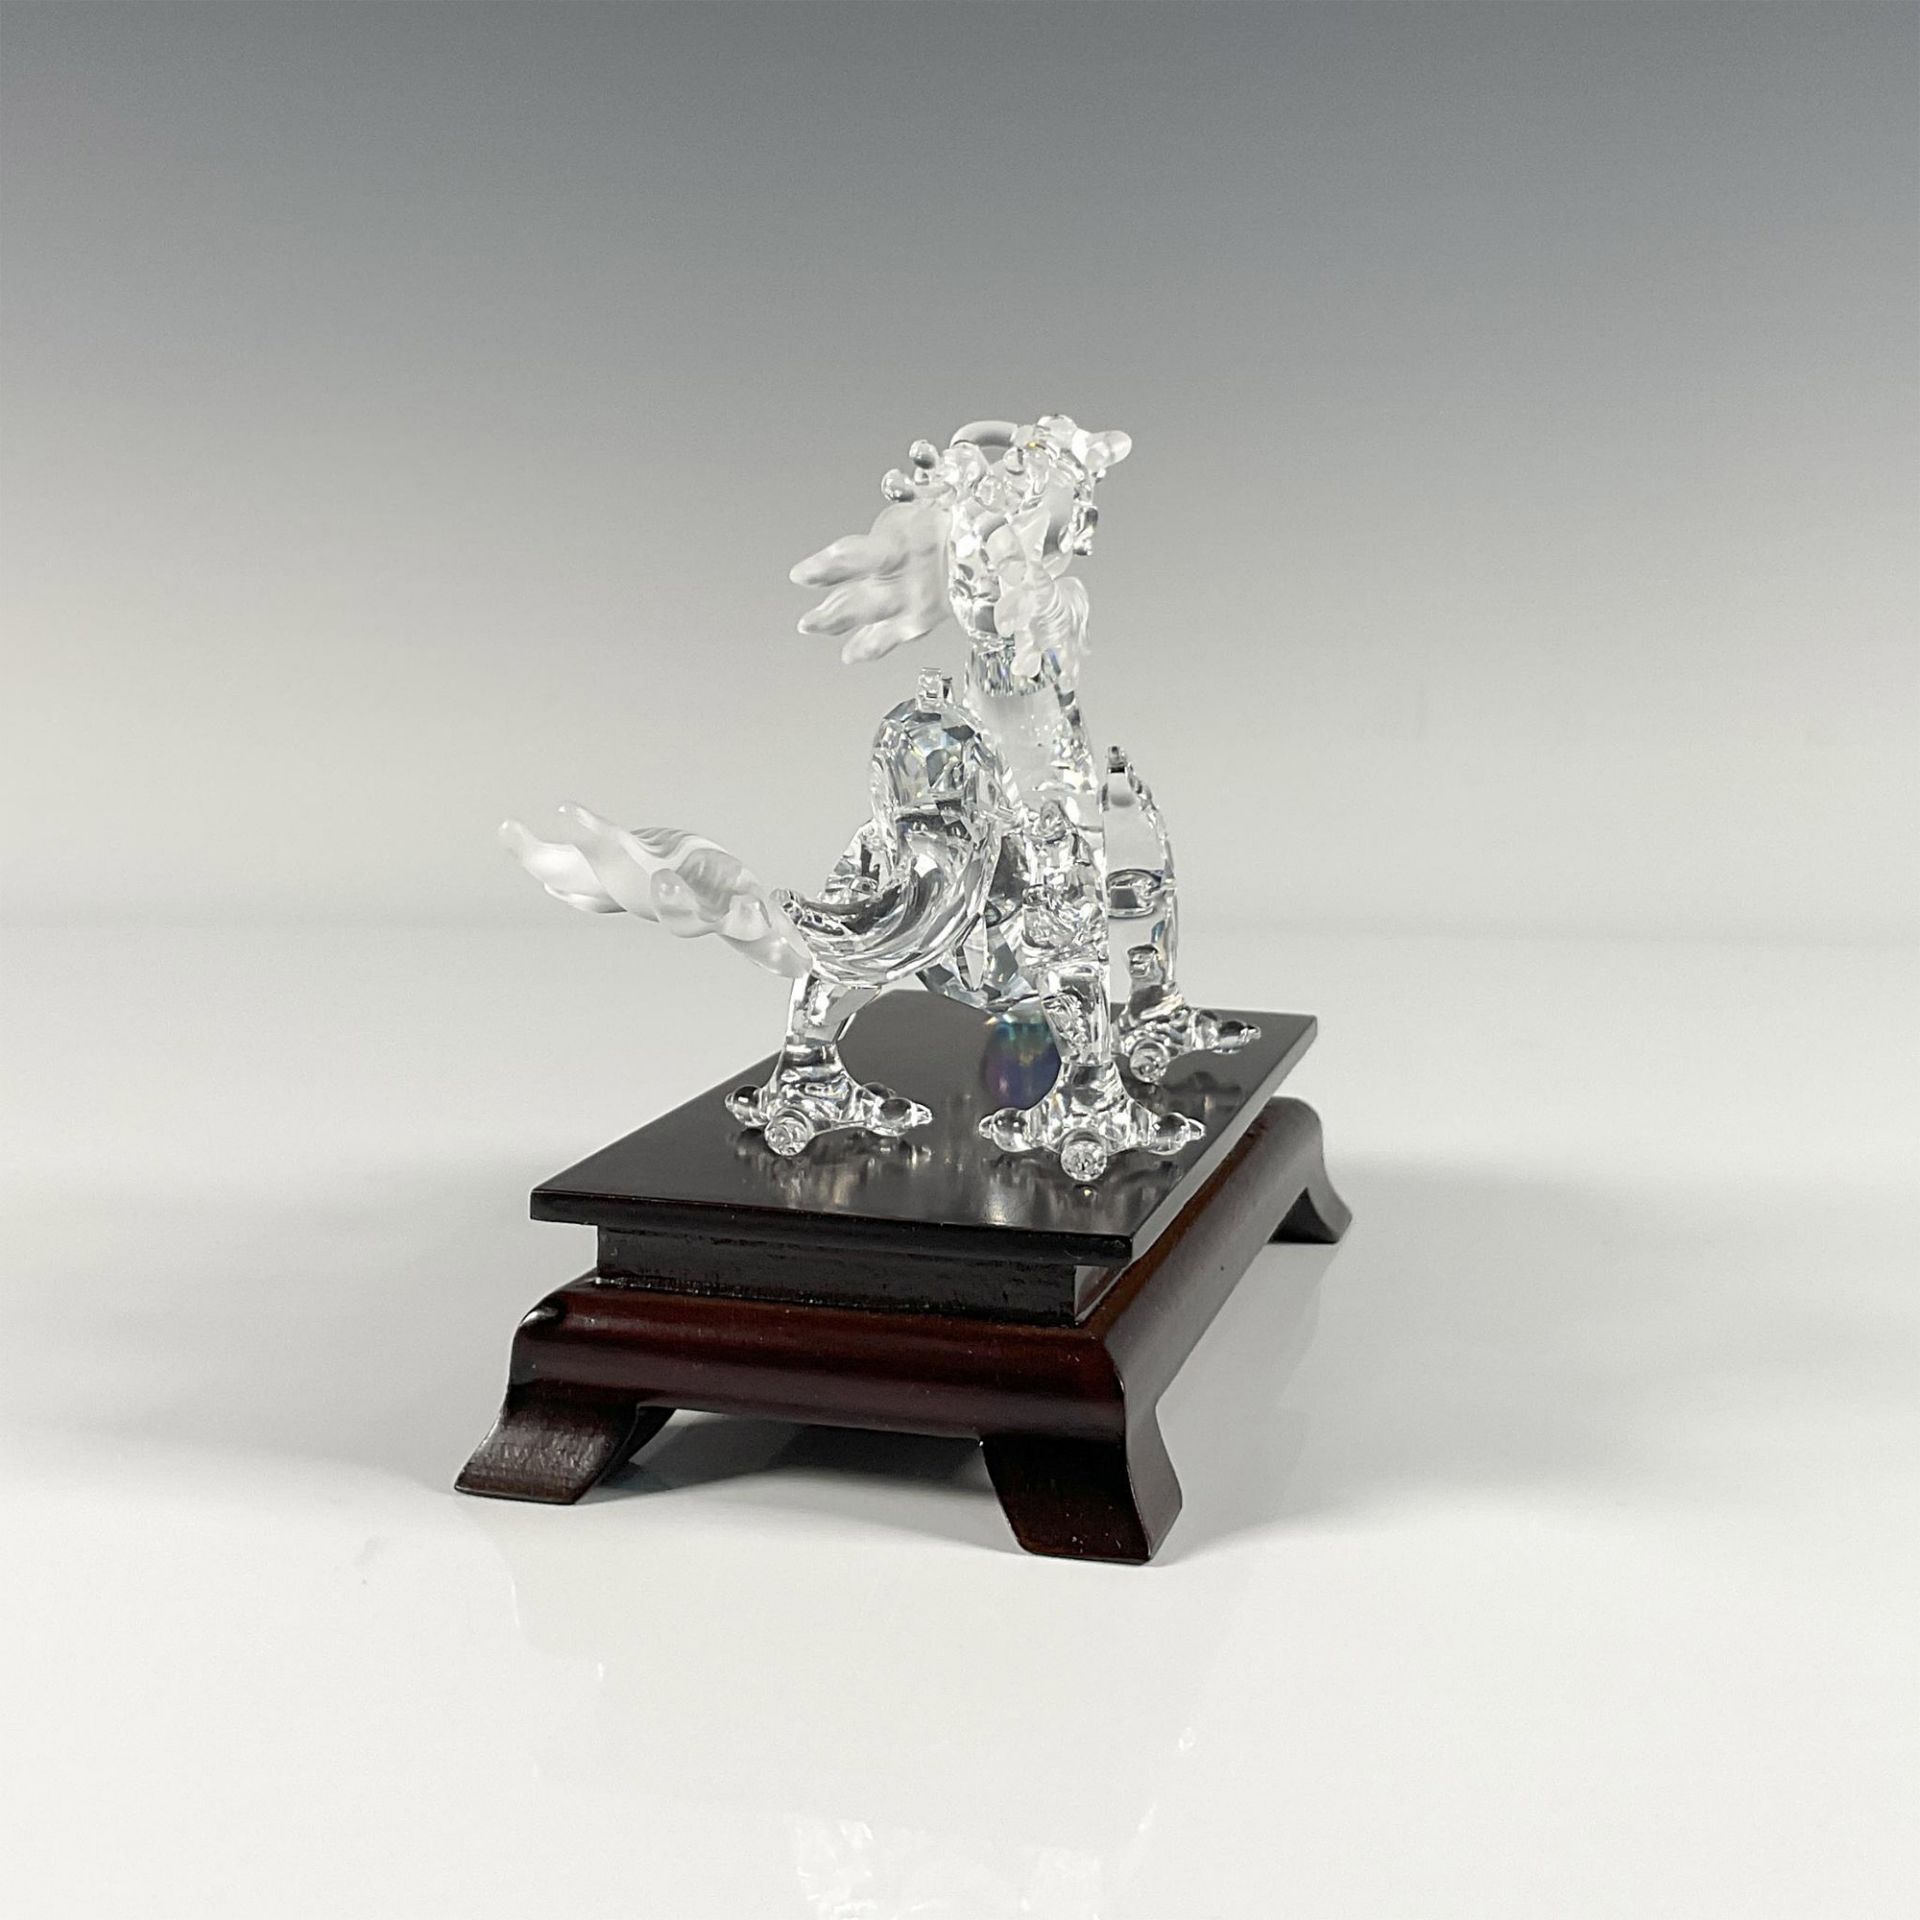 2pc Swarovski Crystal Figurine, Dragon with Stand - Image 2 of 4